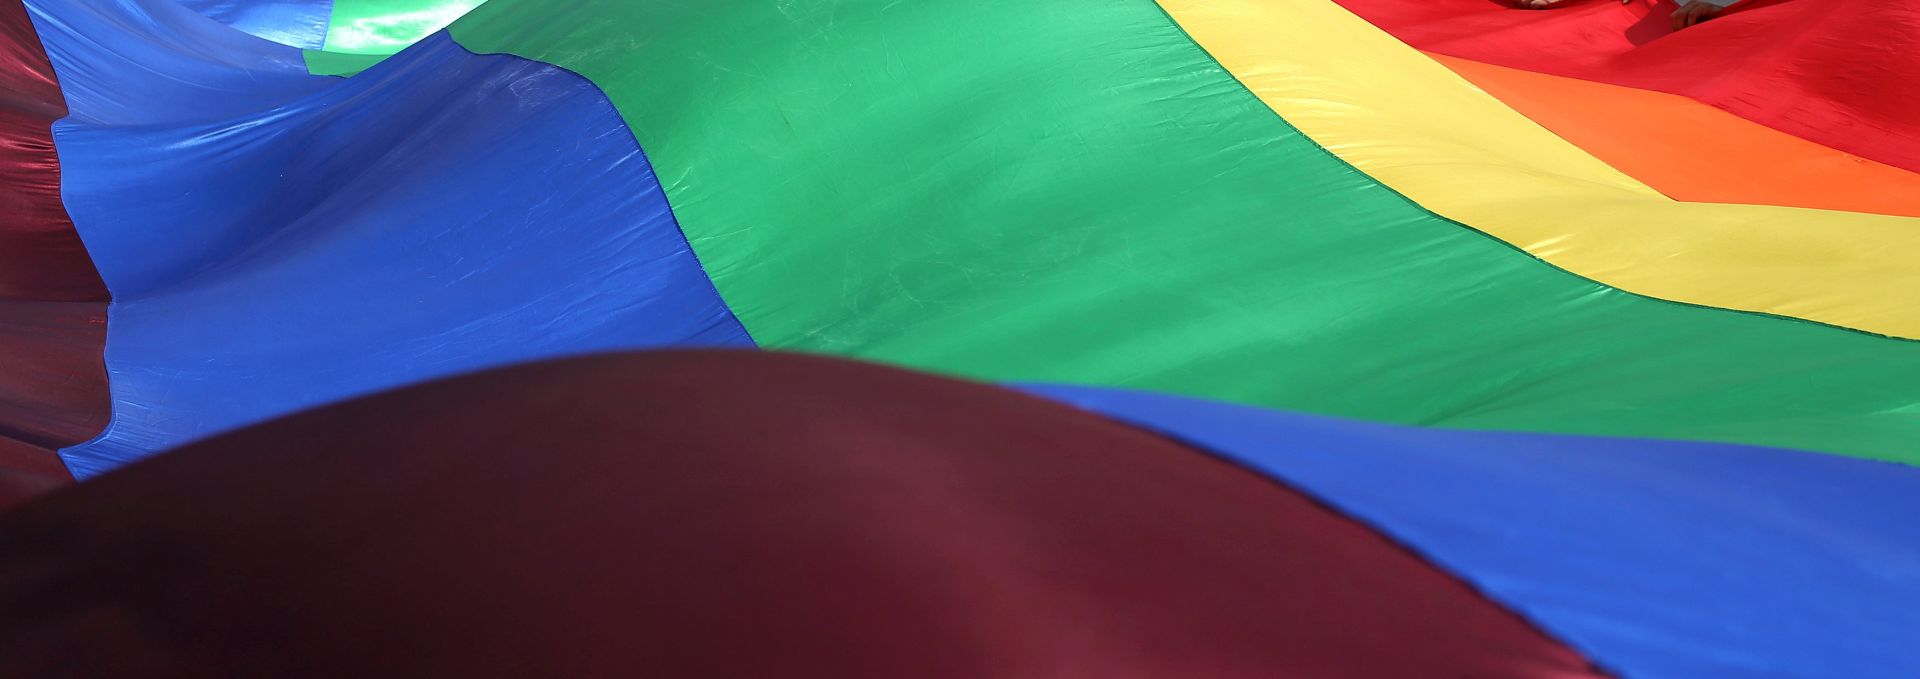 SEUL Gay Pride uz prosvjed konzervativnih kršćana